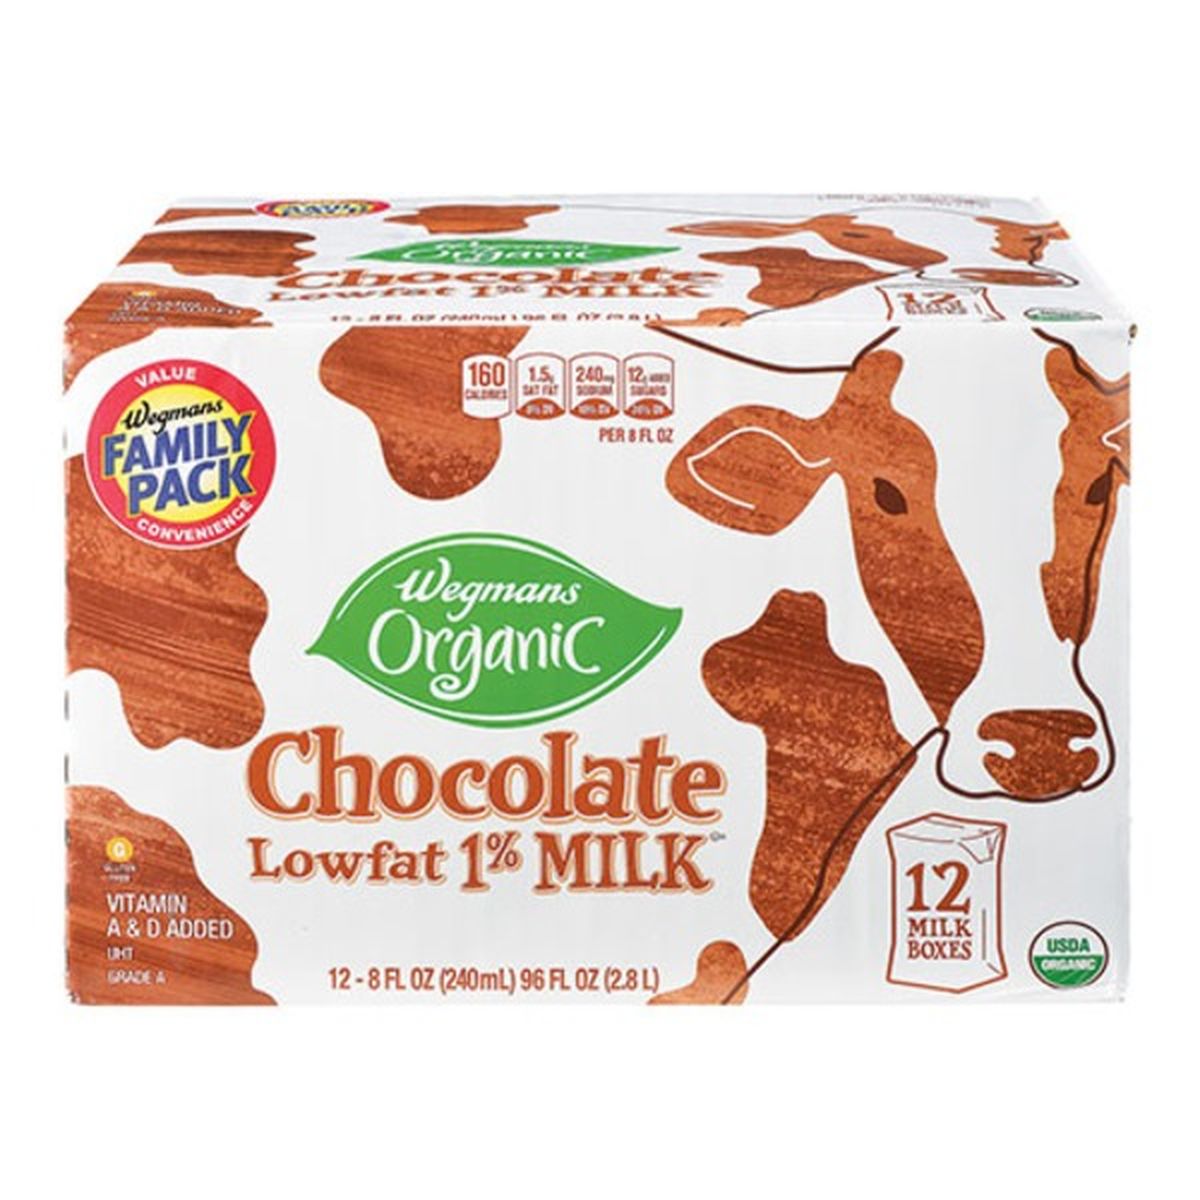 Calories in Wegmans Organic Chocolate Lowfat 1% Milk, 12 Milk Boxes, FAMILY PACK